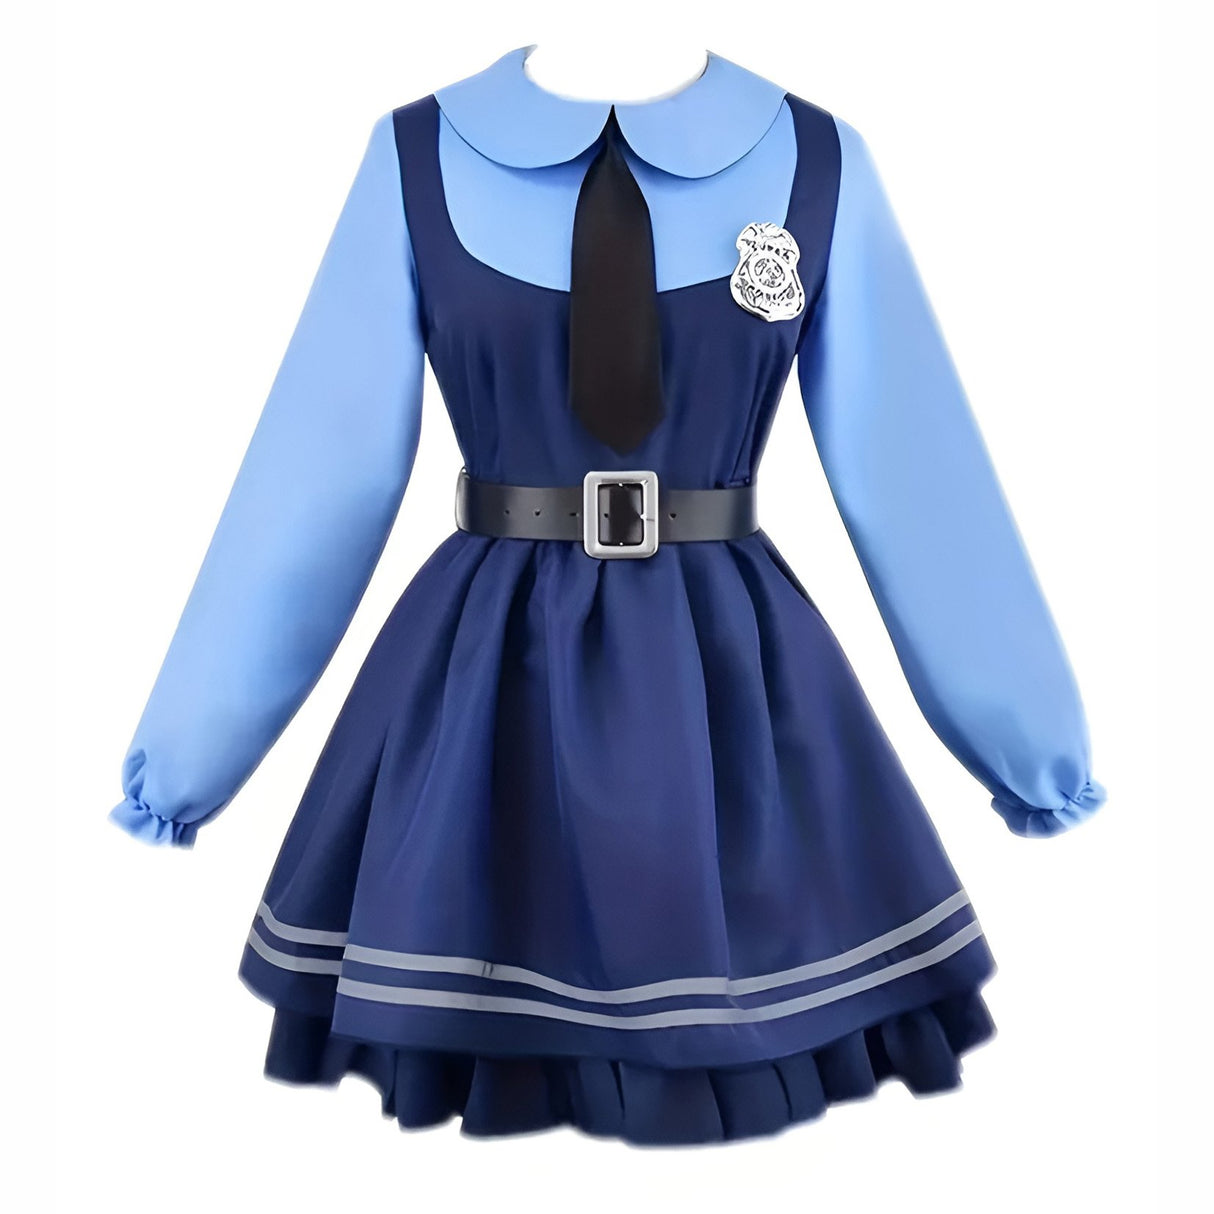 Zootopia Inspired Judy Hopps Police Kids Costume